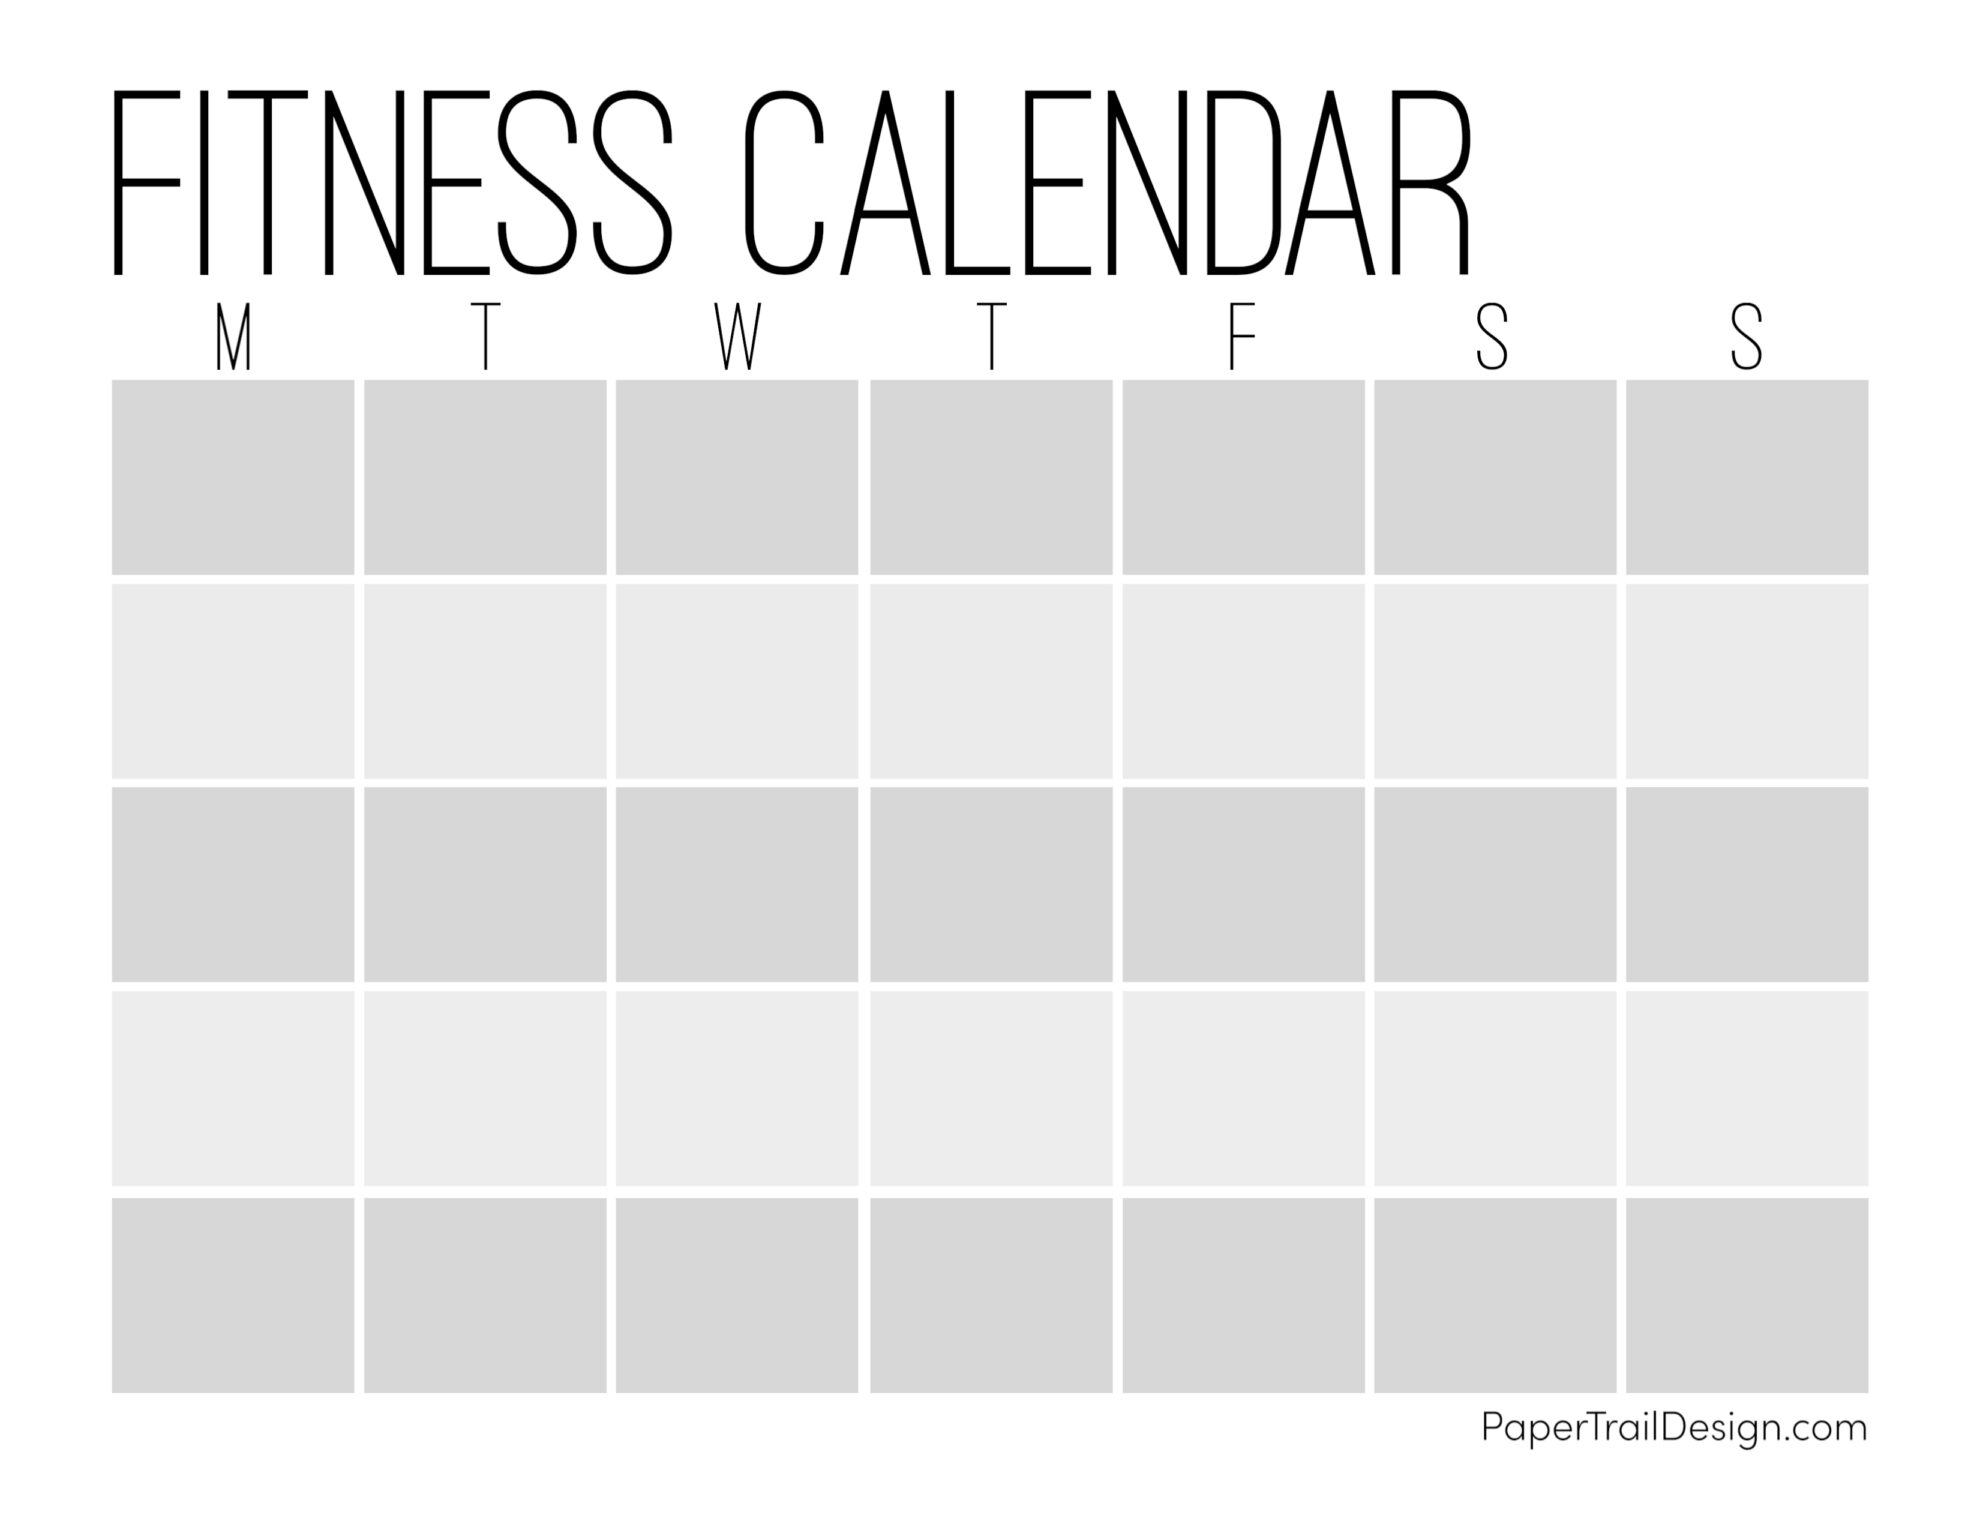 Free Printable Workout Calendar Template Paper Trail Design